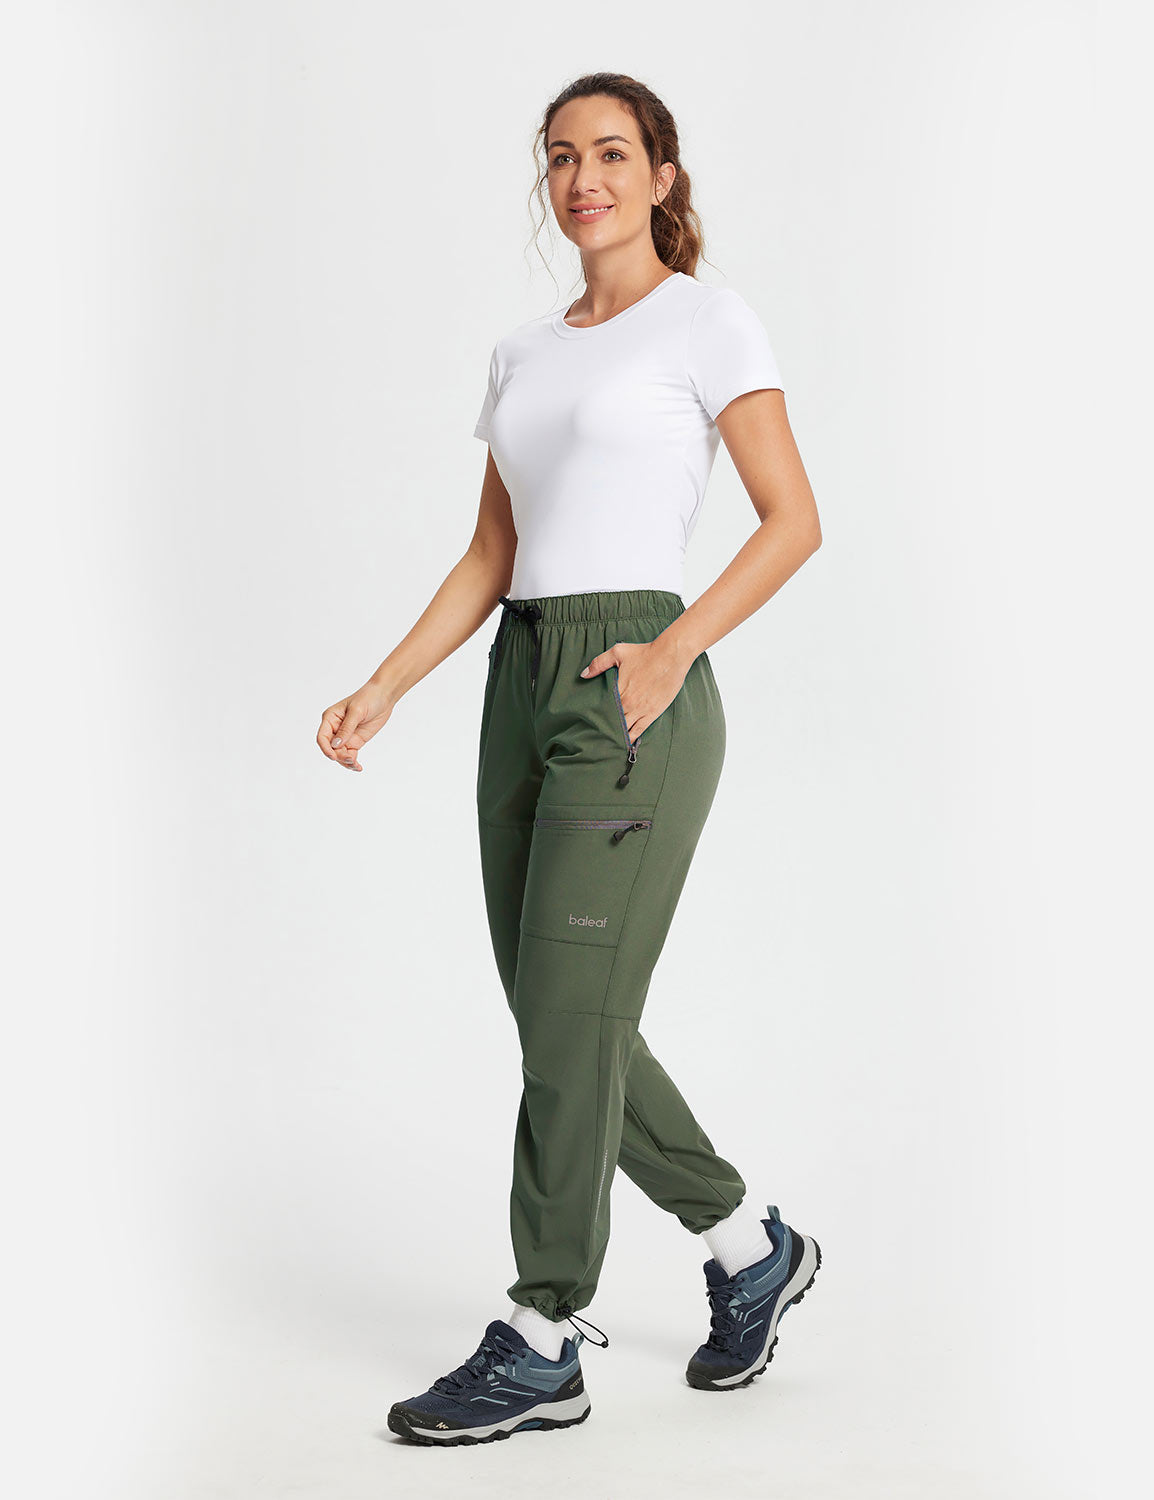 Baleaf Women's Drawstring UPF50+ Lightweight Hiking Pants Rifle Green Full